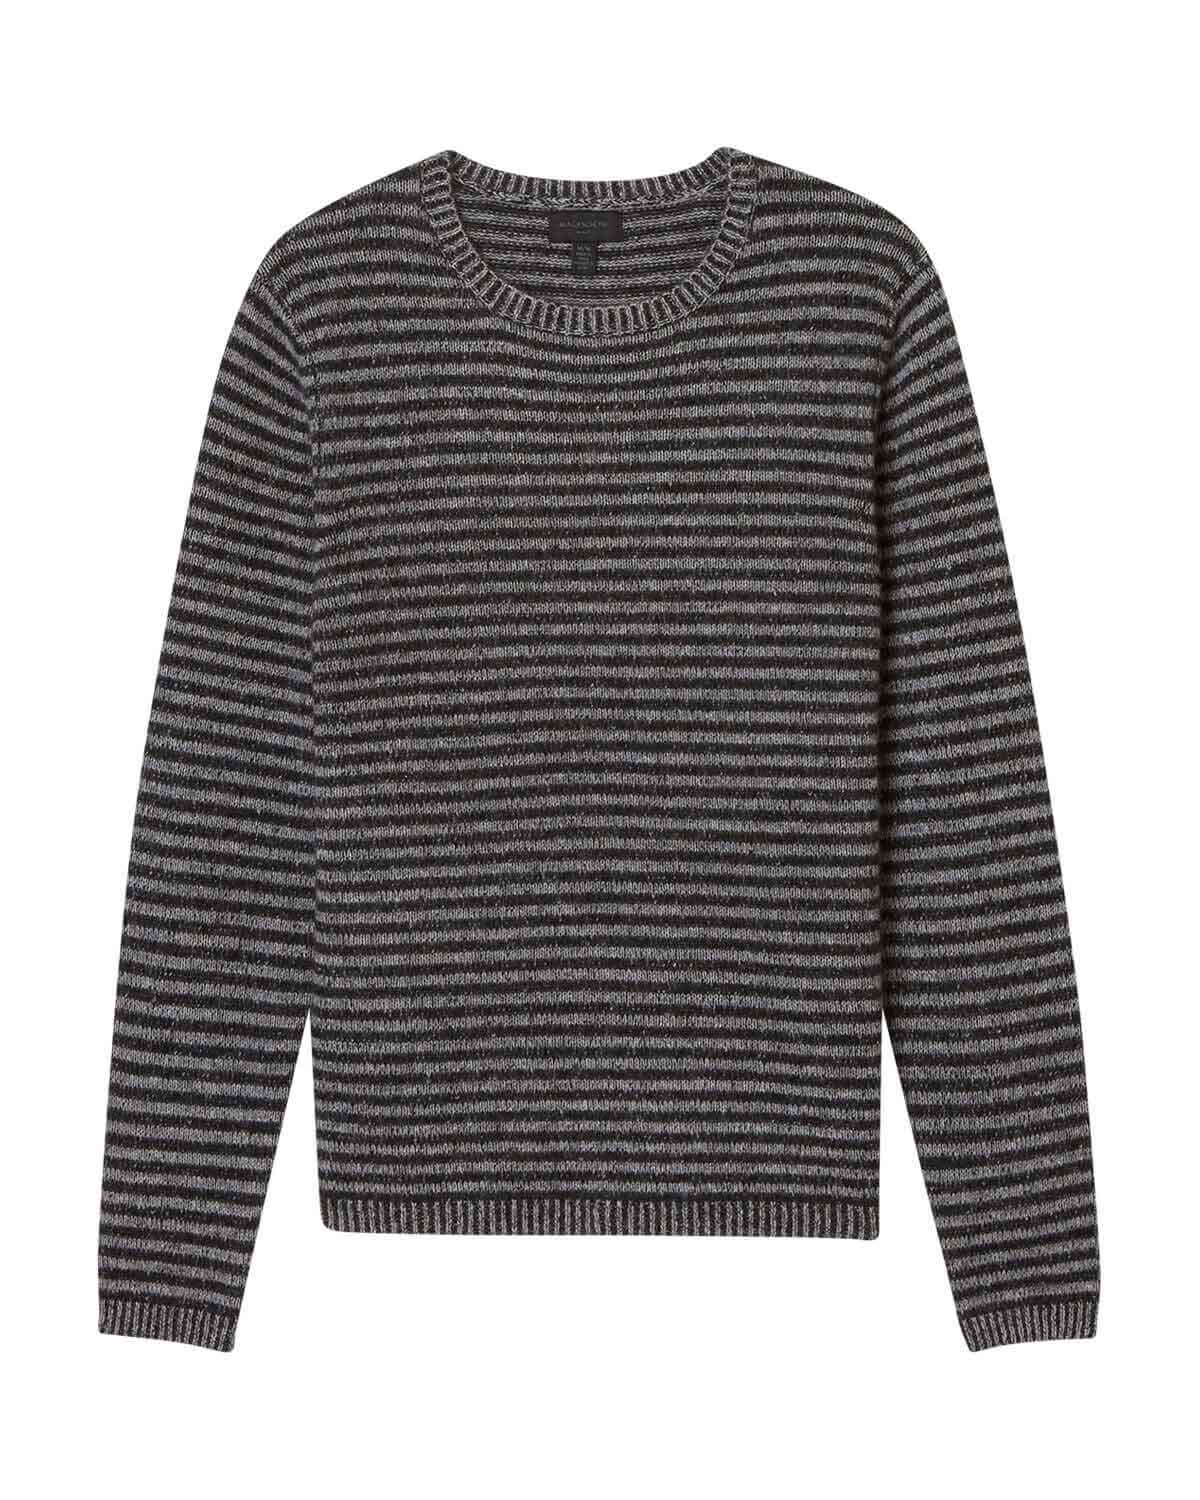 Shop Men's Cashmere Stripe Pullover Sweater | Magaschoni Men | JANE + MERCER